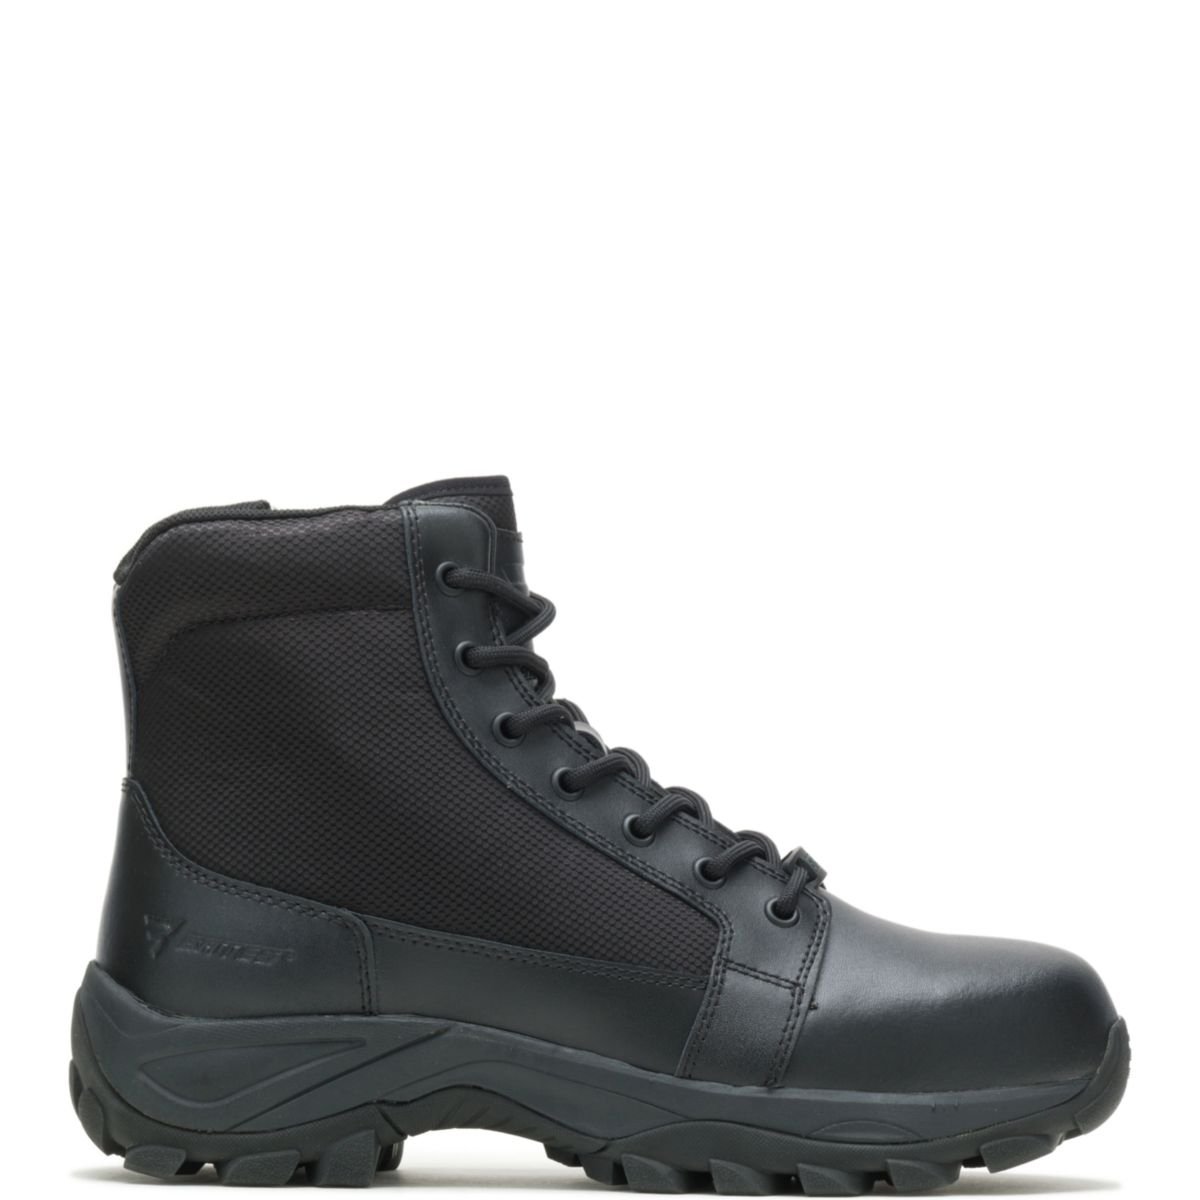 Bates Men's Fuse Zip 6-Inch Side Zip Steel Toe Work Boot Black - E06505 BLACK - BLACK, 8.5